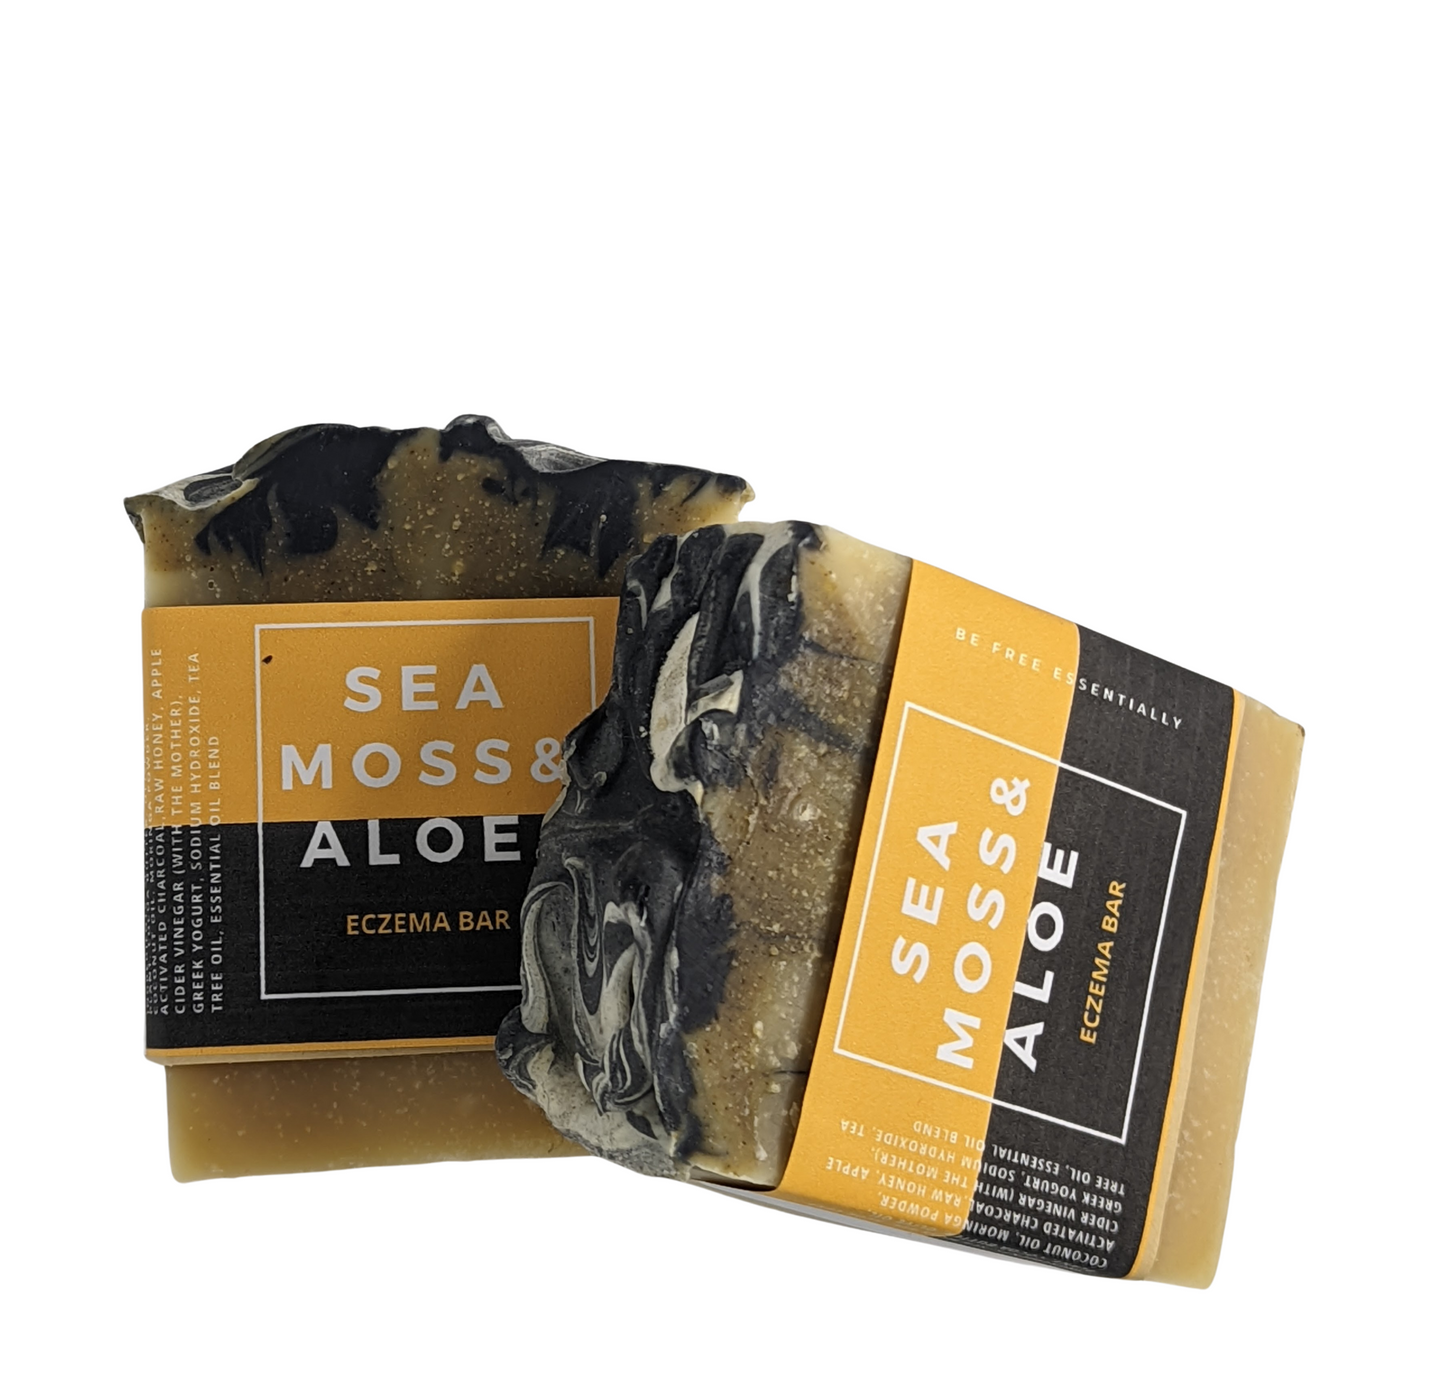 Sea Moss & Aloe Soap